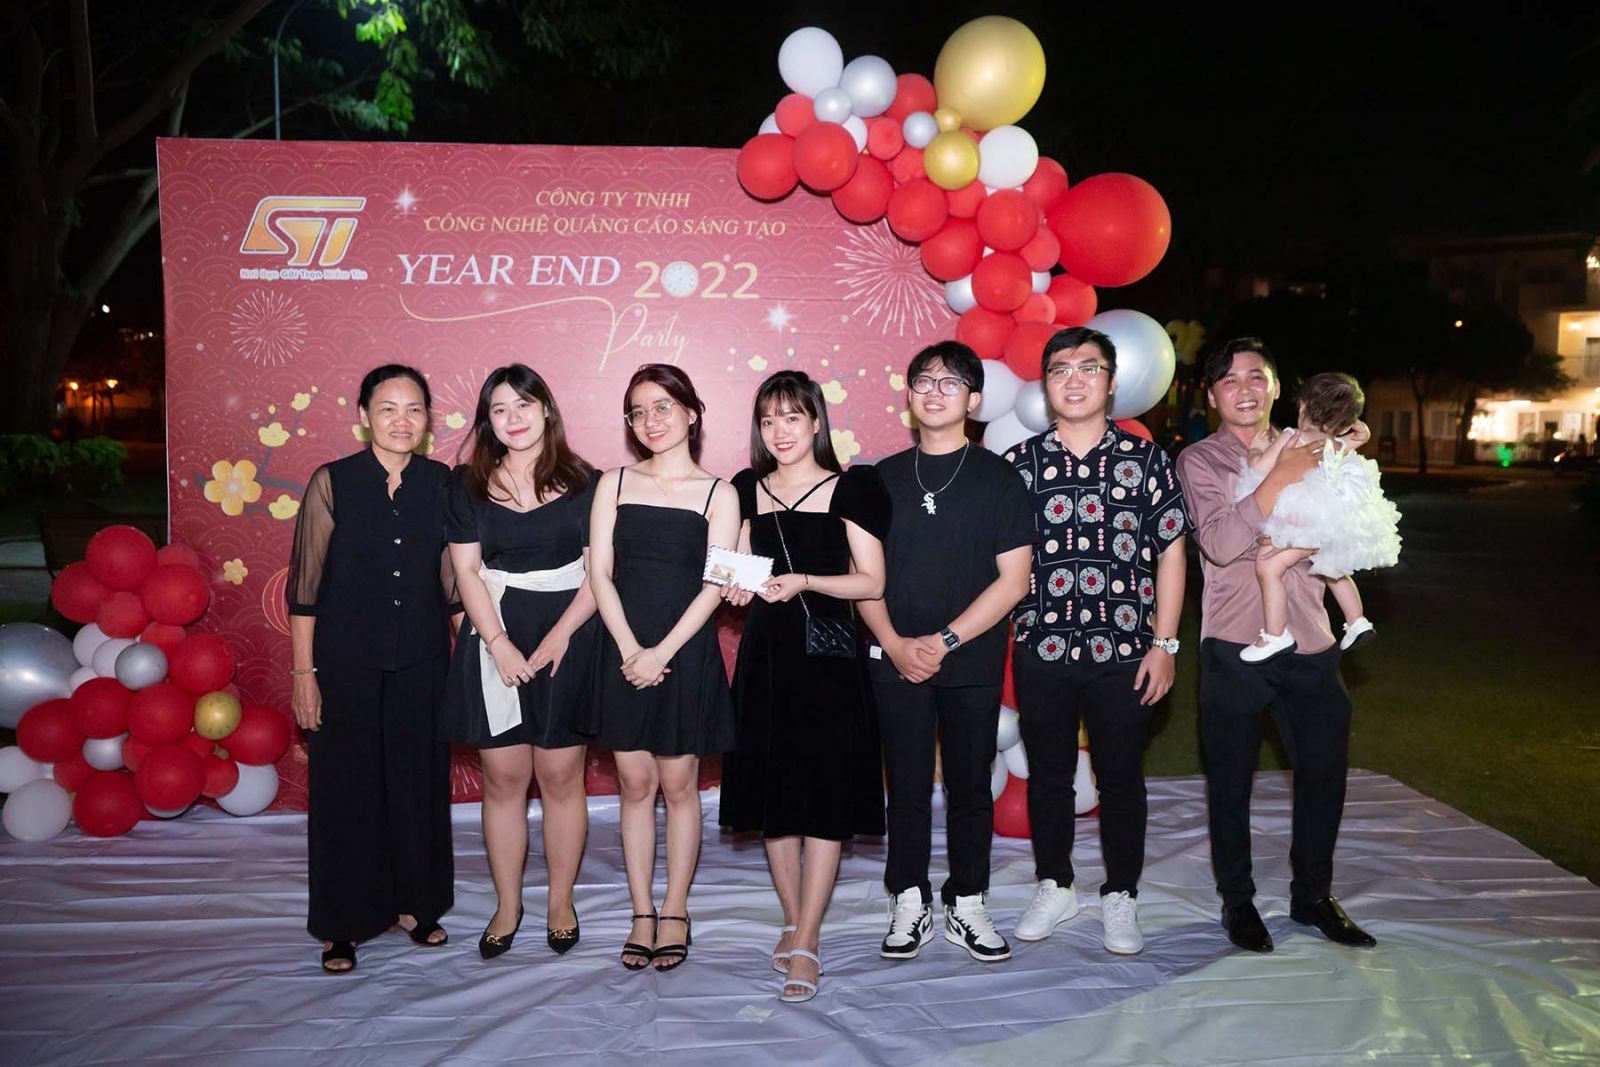 Year end party 2022 - Tất niên sangtaoads